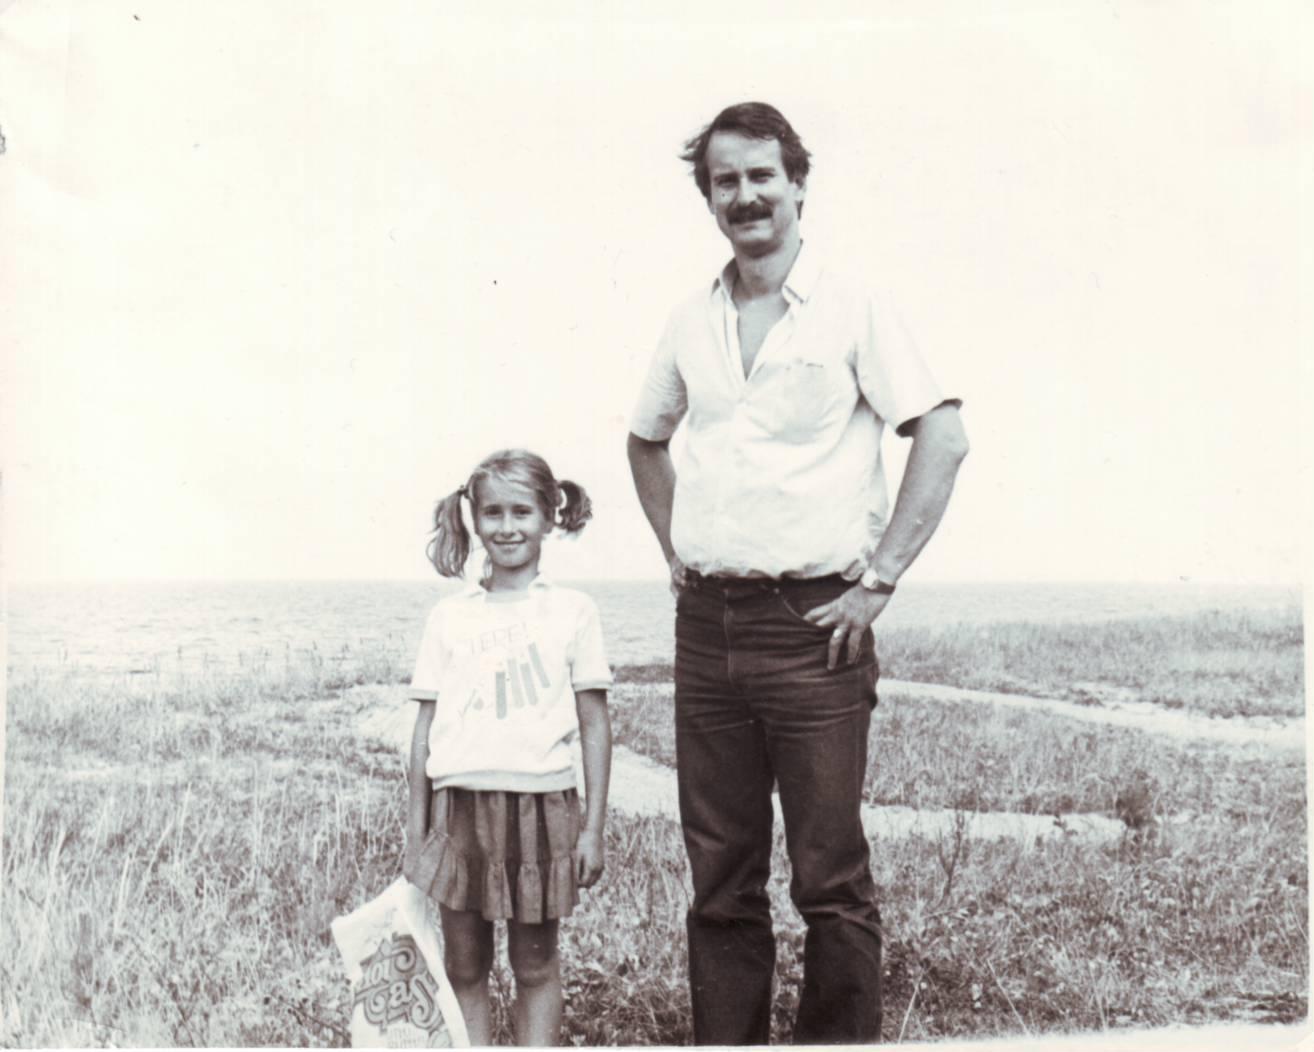 Siim Kallas (former PM of Estonia) with his daughter Kaja Kallas (current PM of Estonia) 1987.jpg